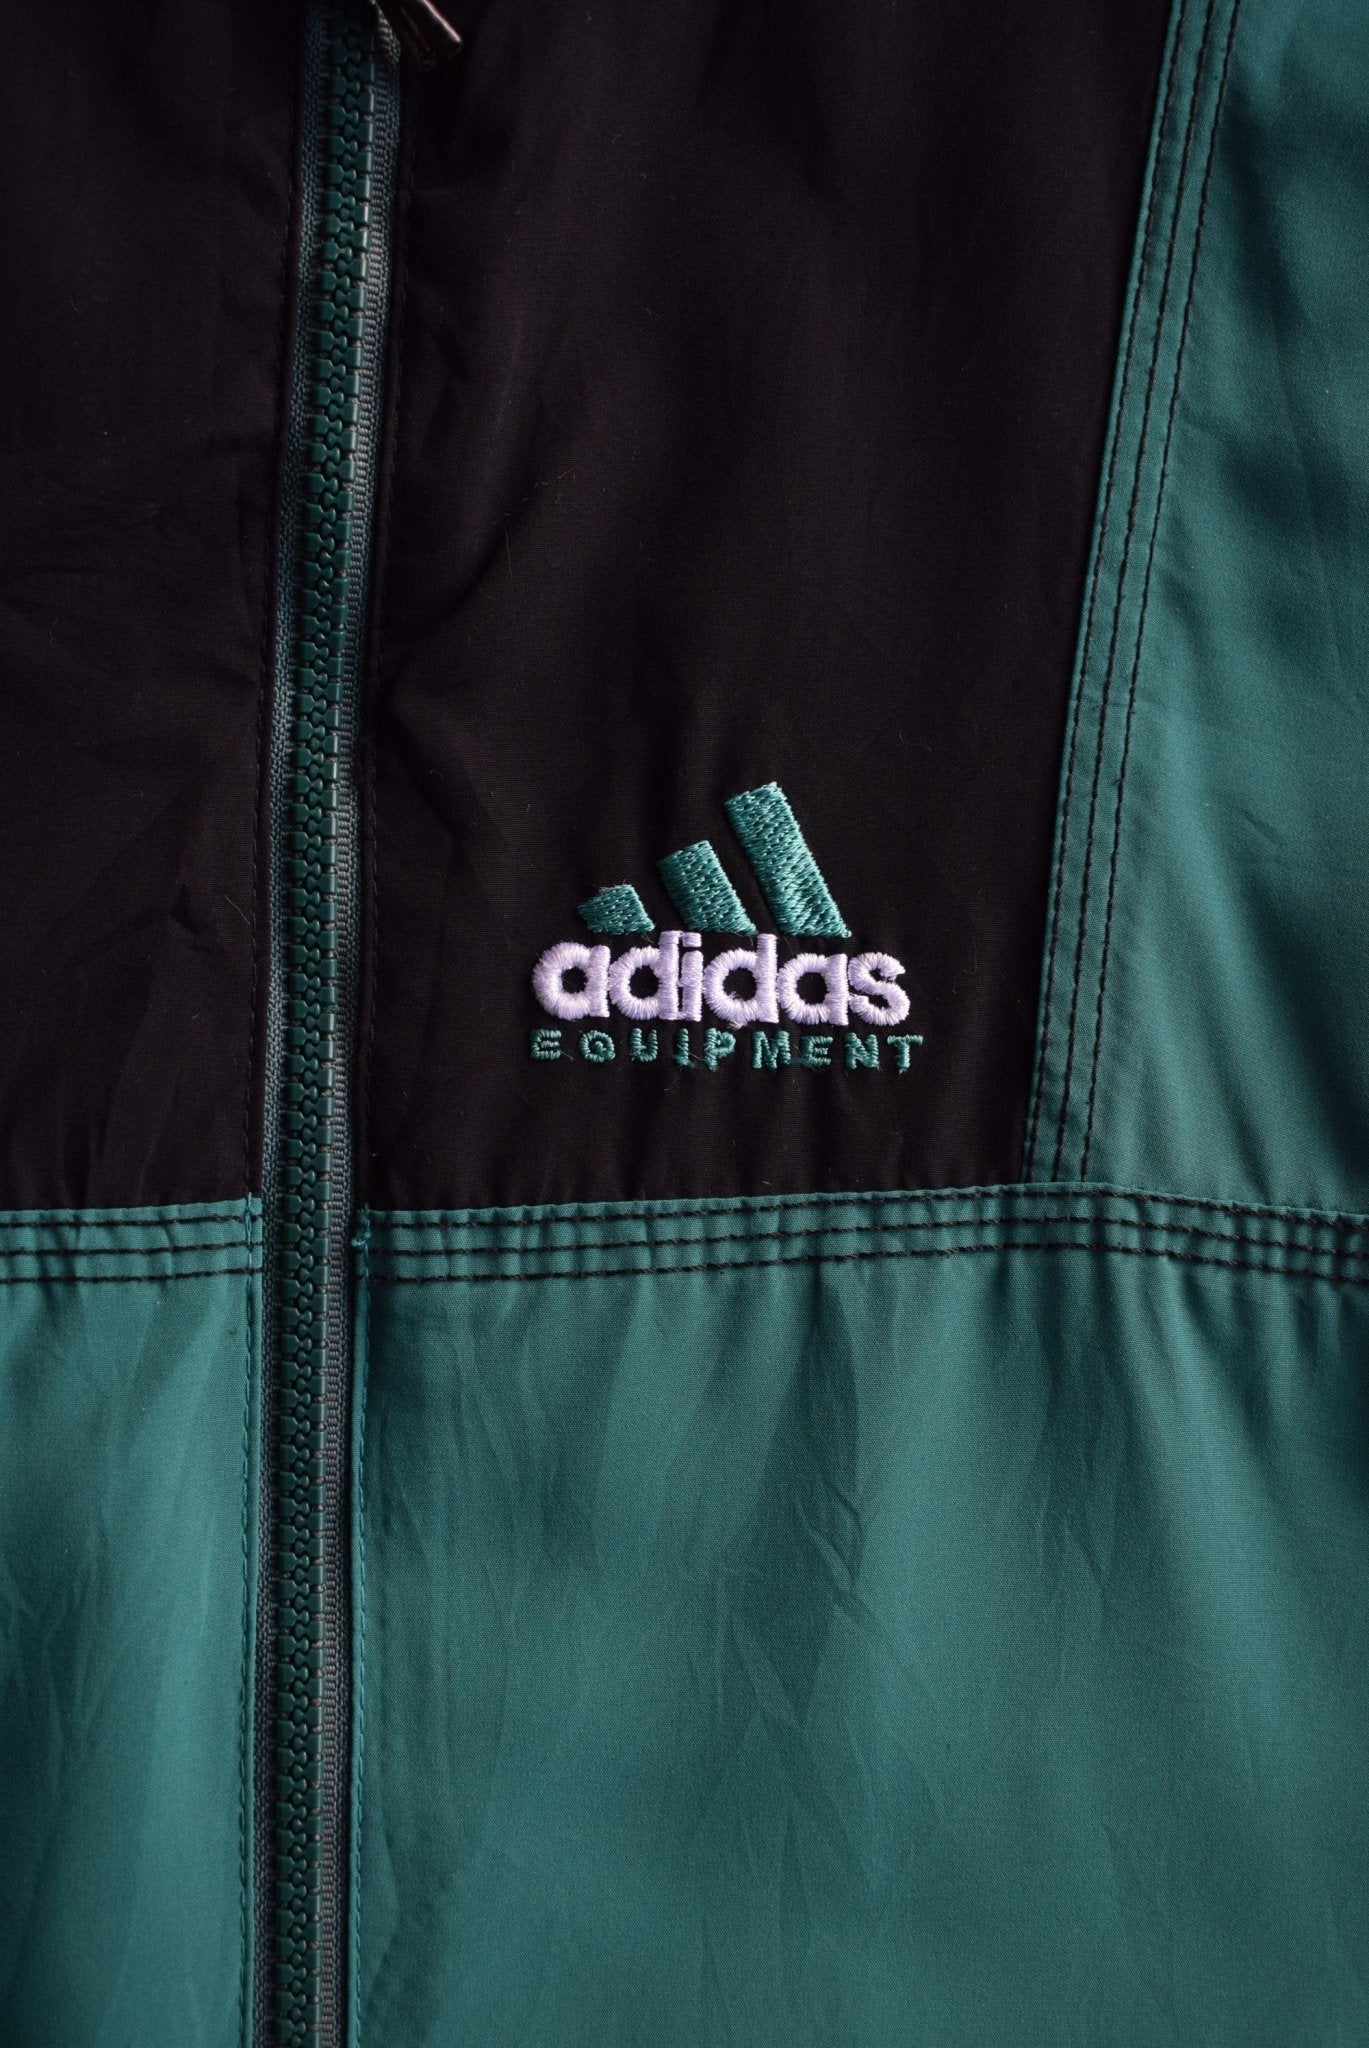 Vintage 90s Adidas Equipment Embroidered Jacket (M) - Retrospective Store